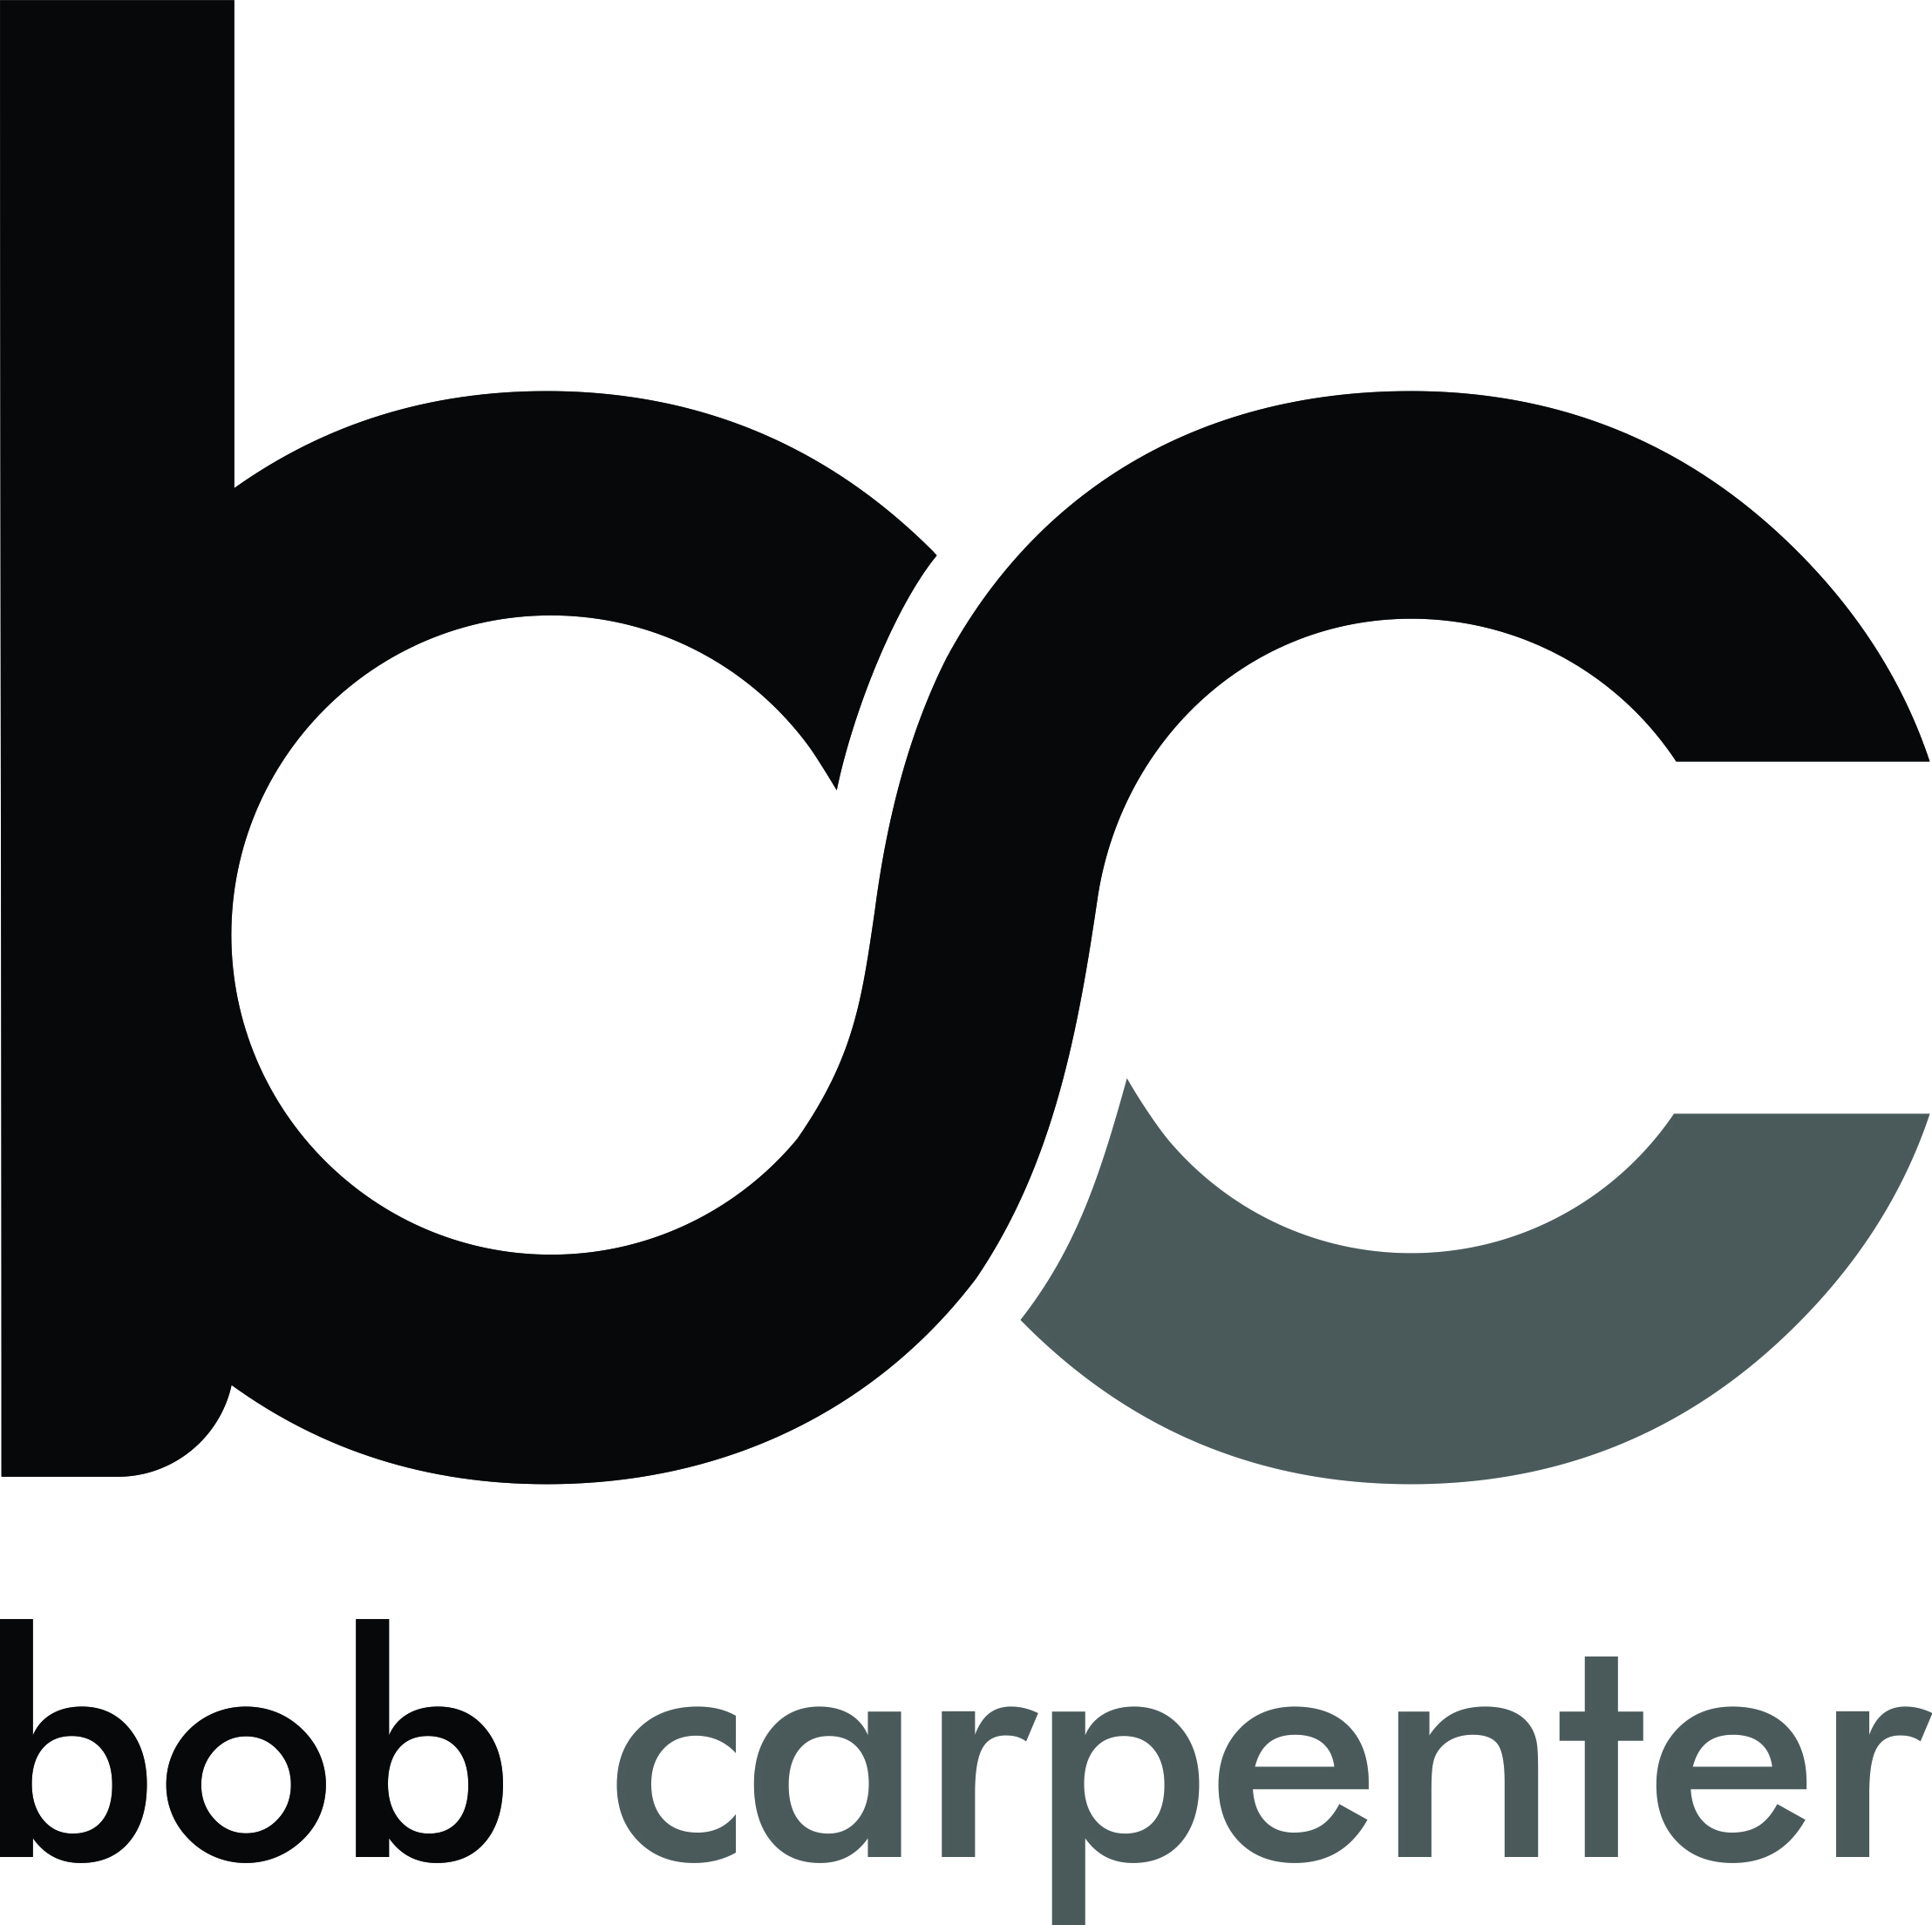 PHOTO BOOTH - RI DJ Bob Carpenter